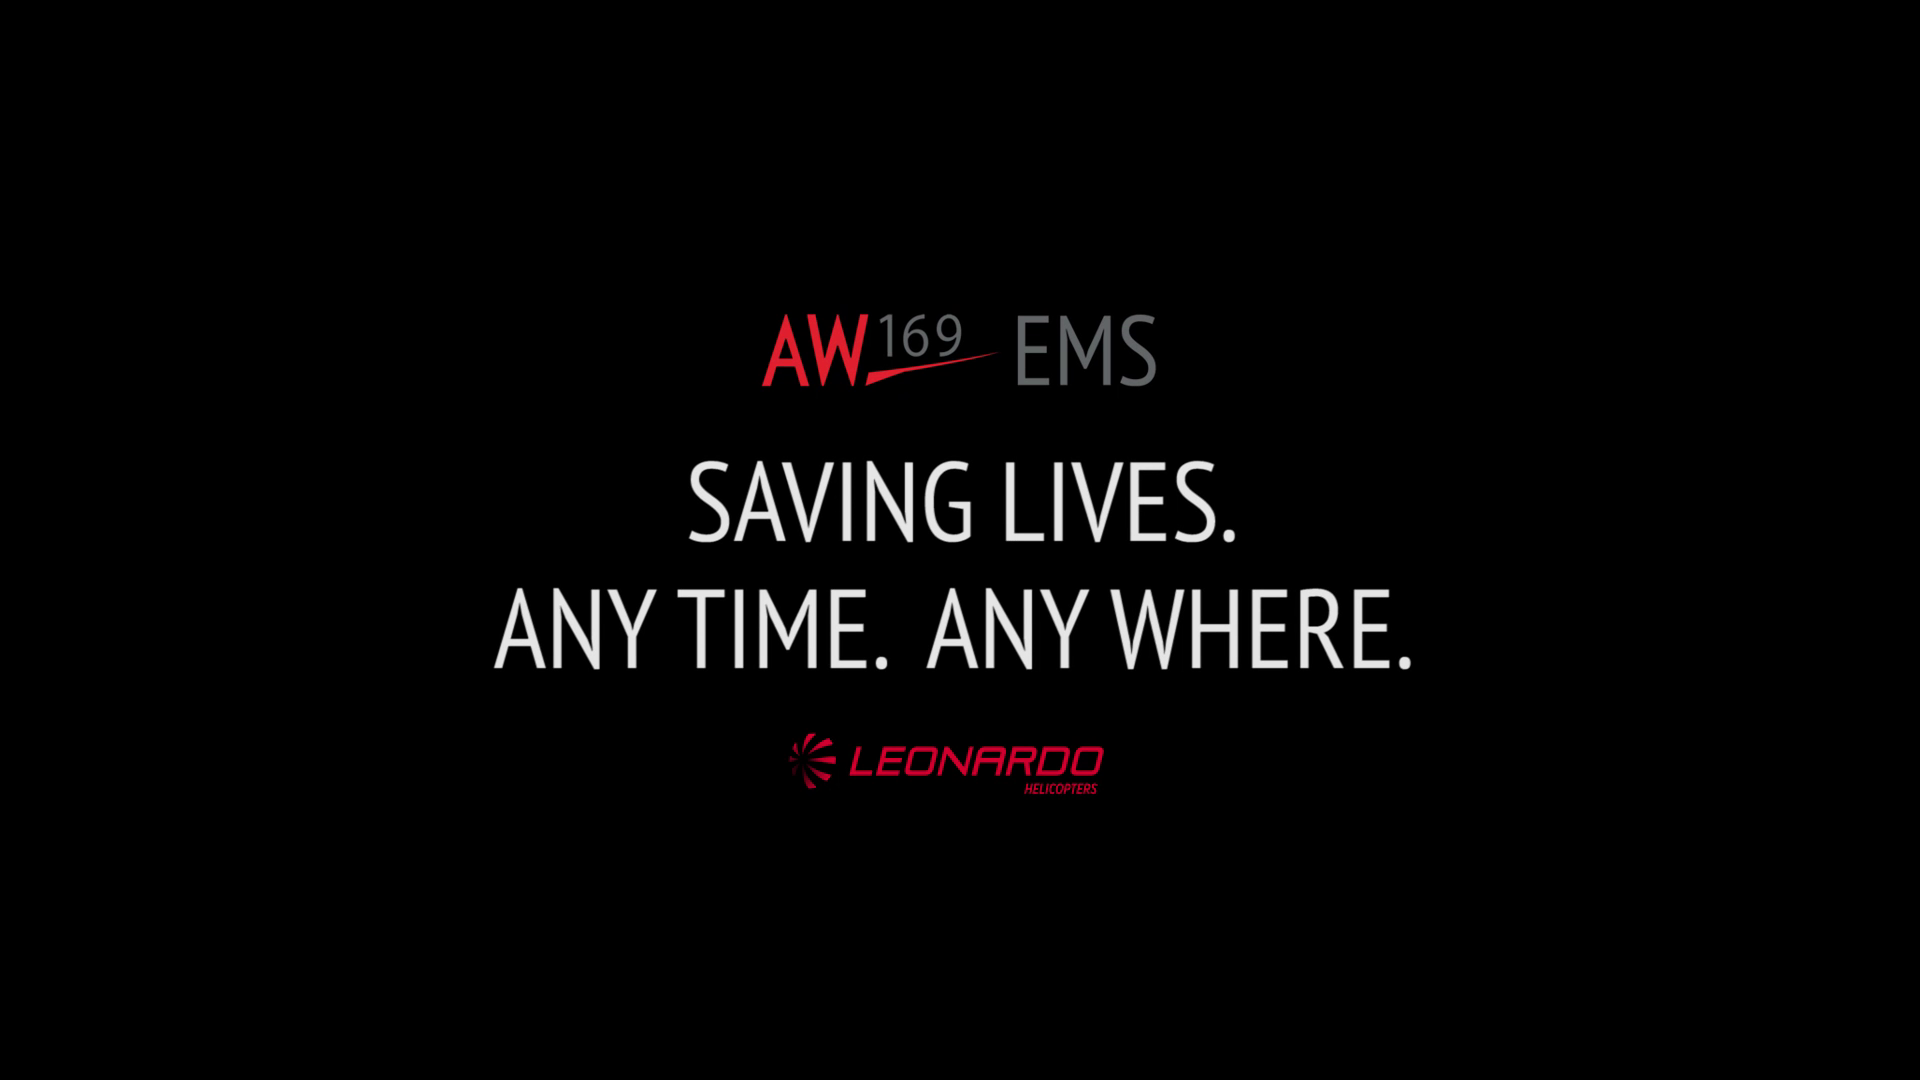 AW169 EMS-Saving lives, any time, any where